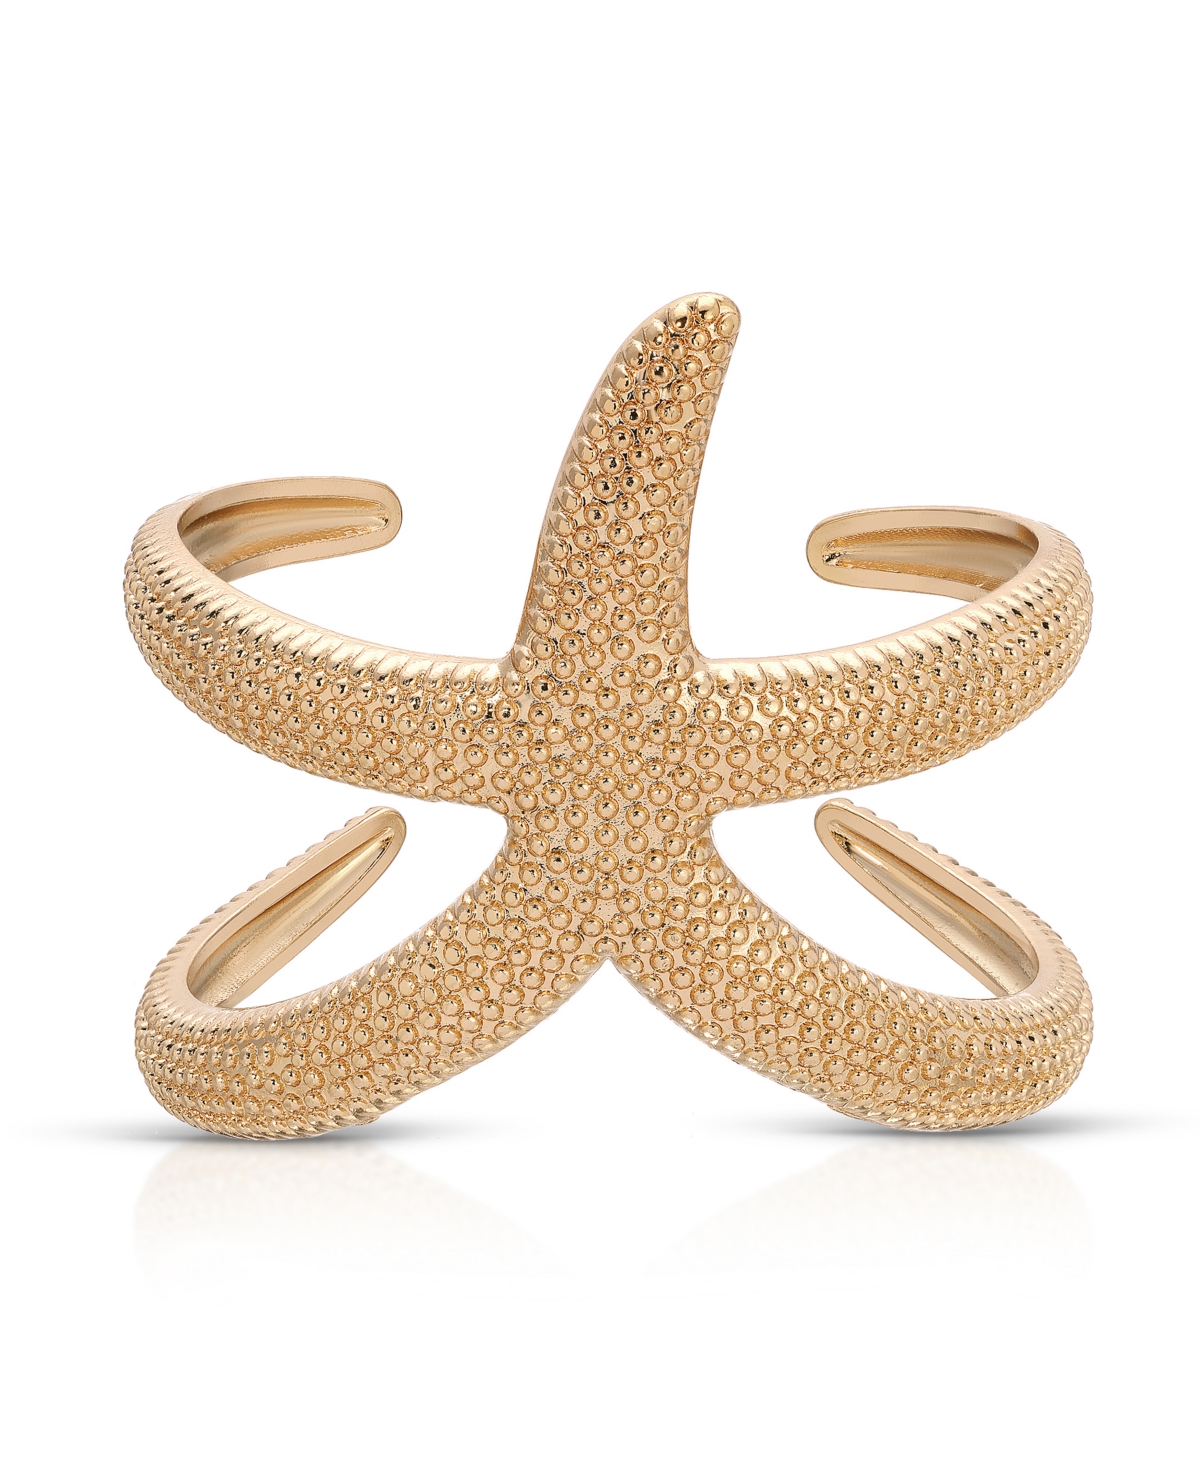 18k Gold Plated Starfish Arm Cuff Bracelet - Gold